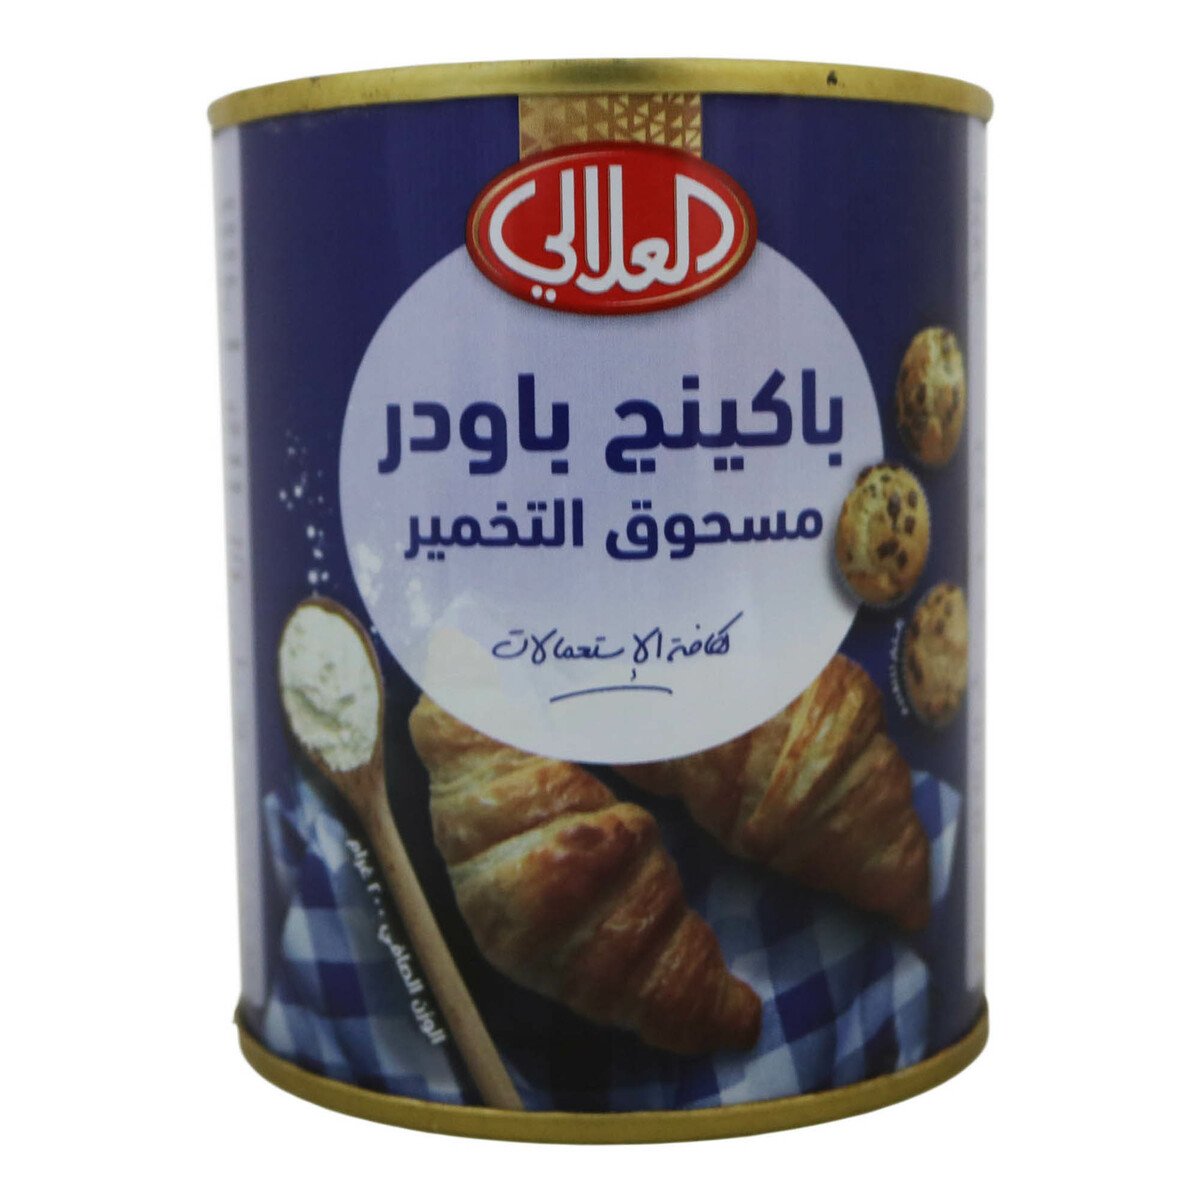 Al Alali Baking Powder 200g